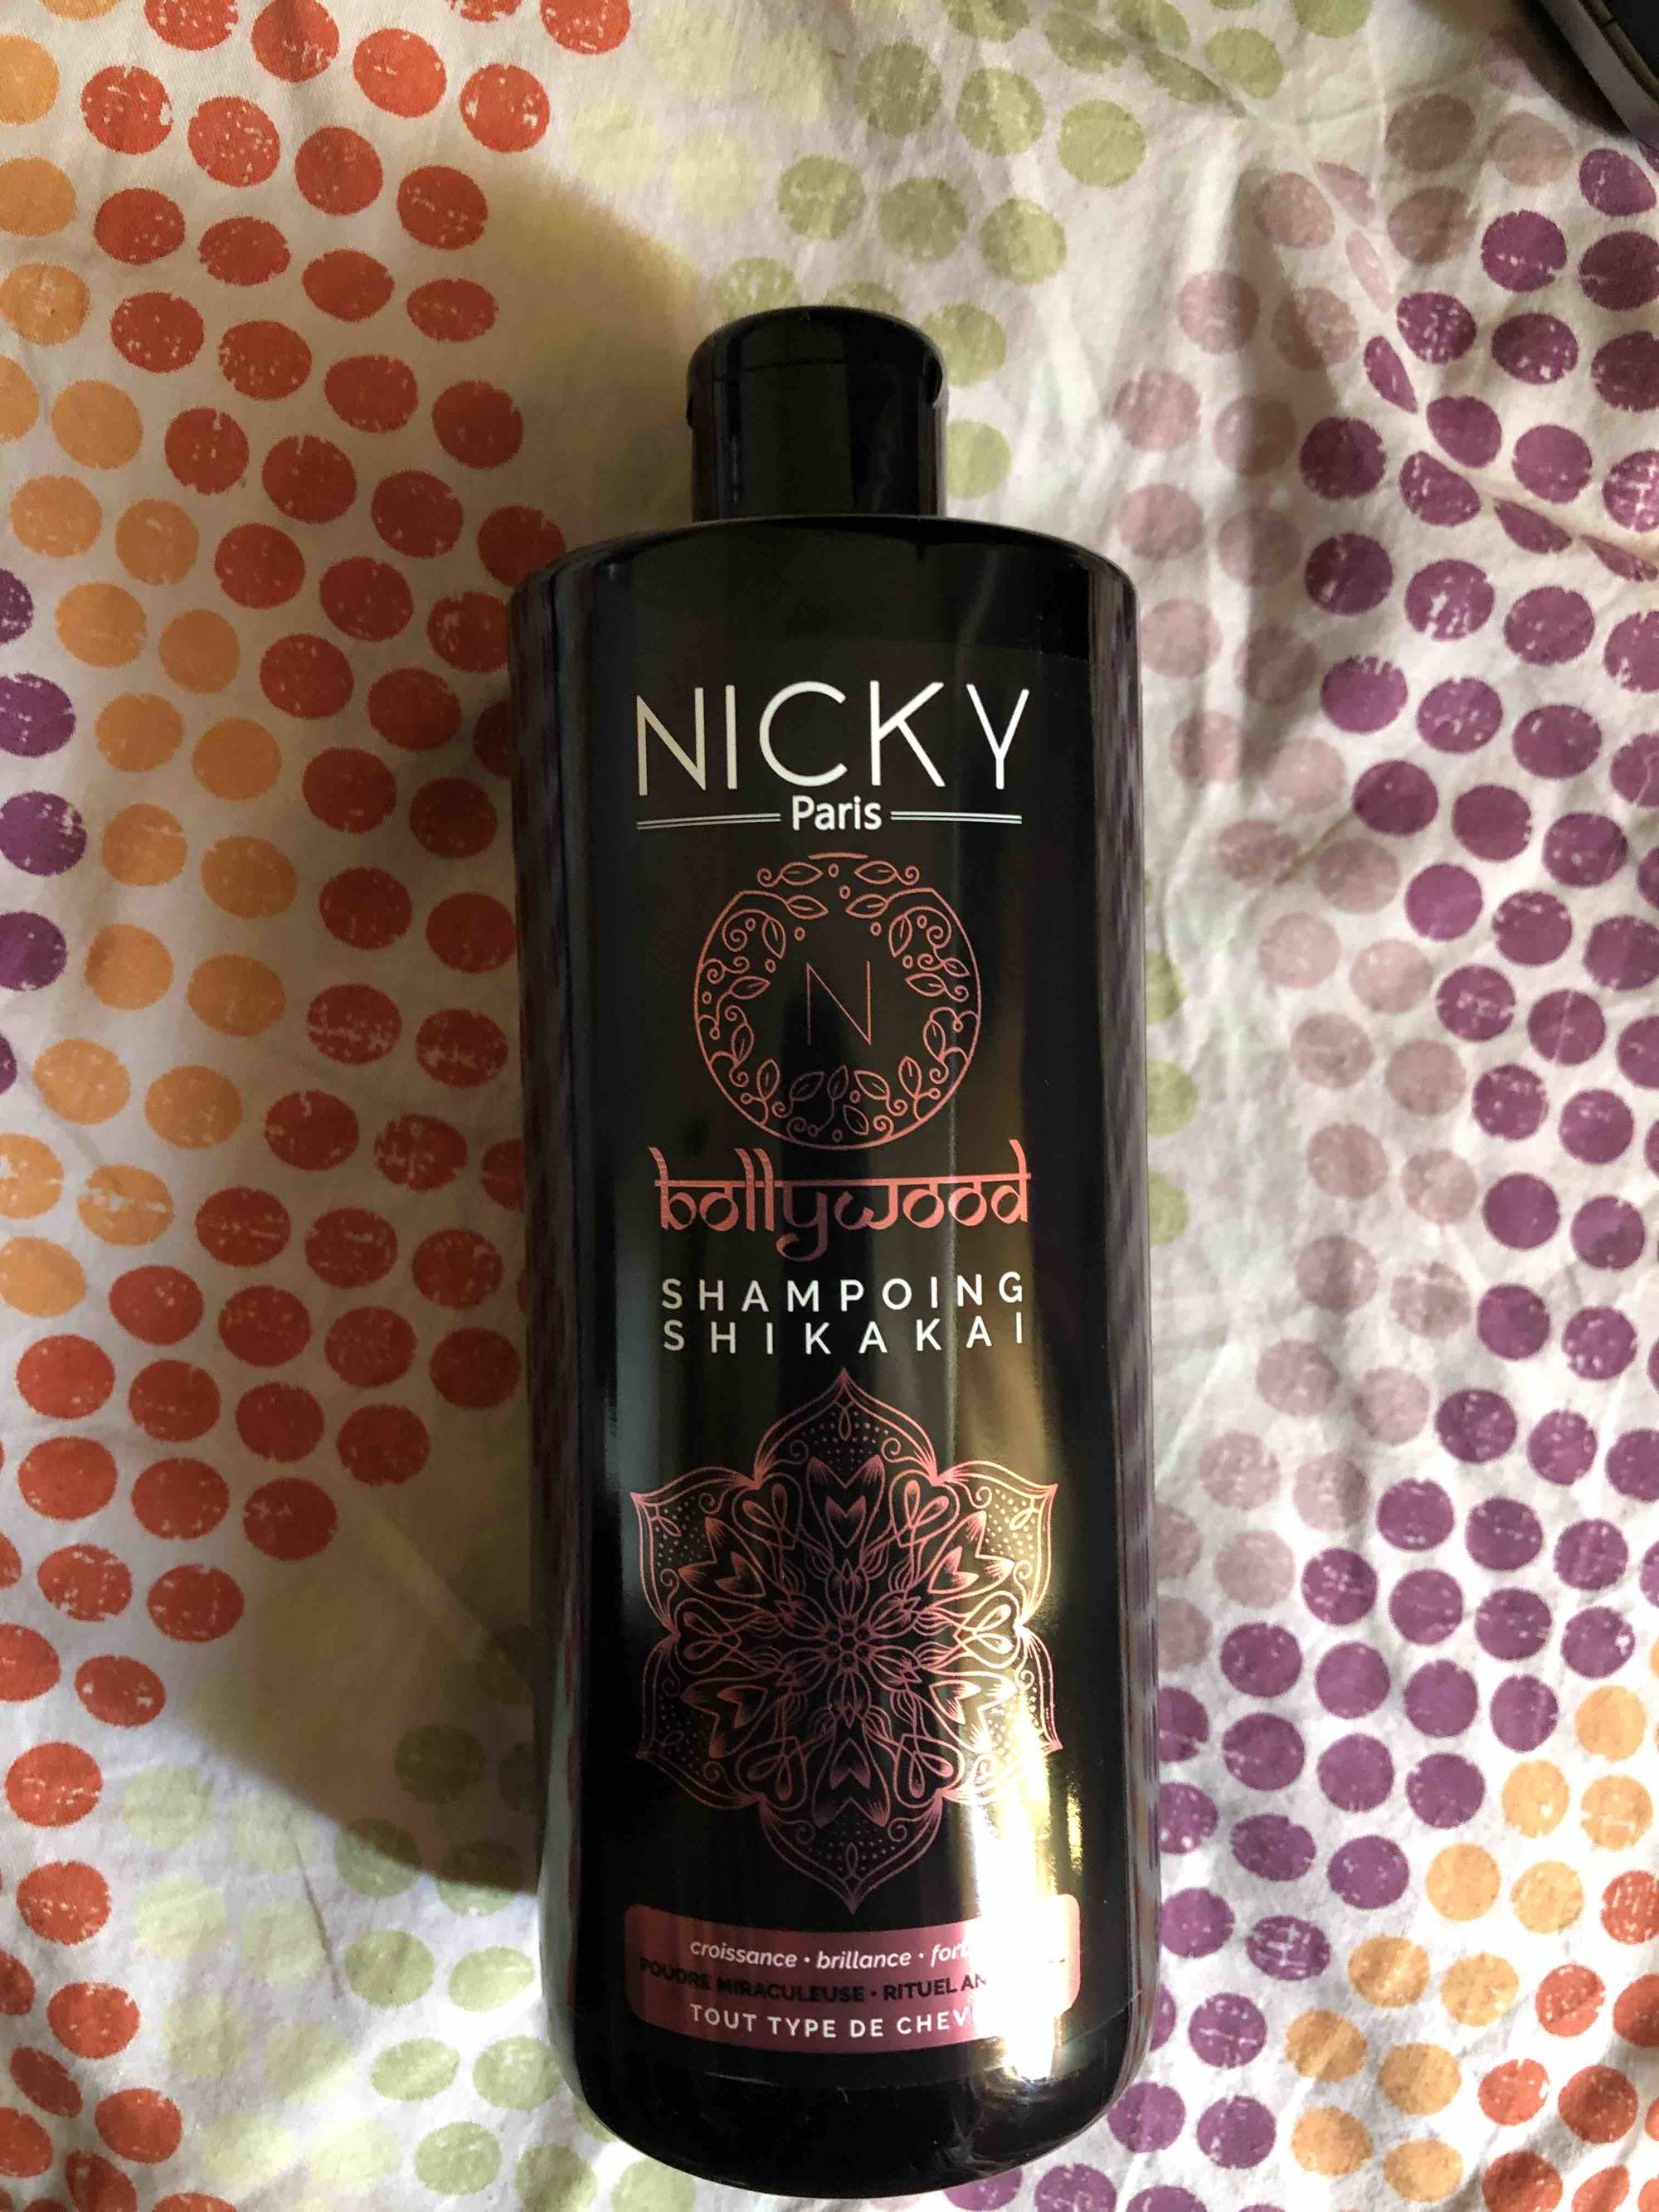 NICKY PARIS - Bollywood - Shampoing shikakai